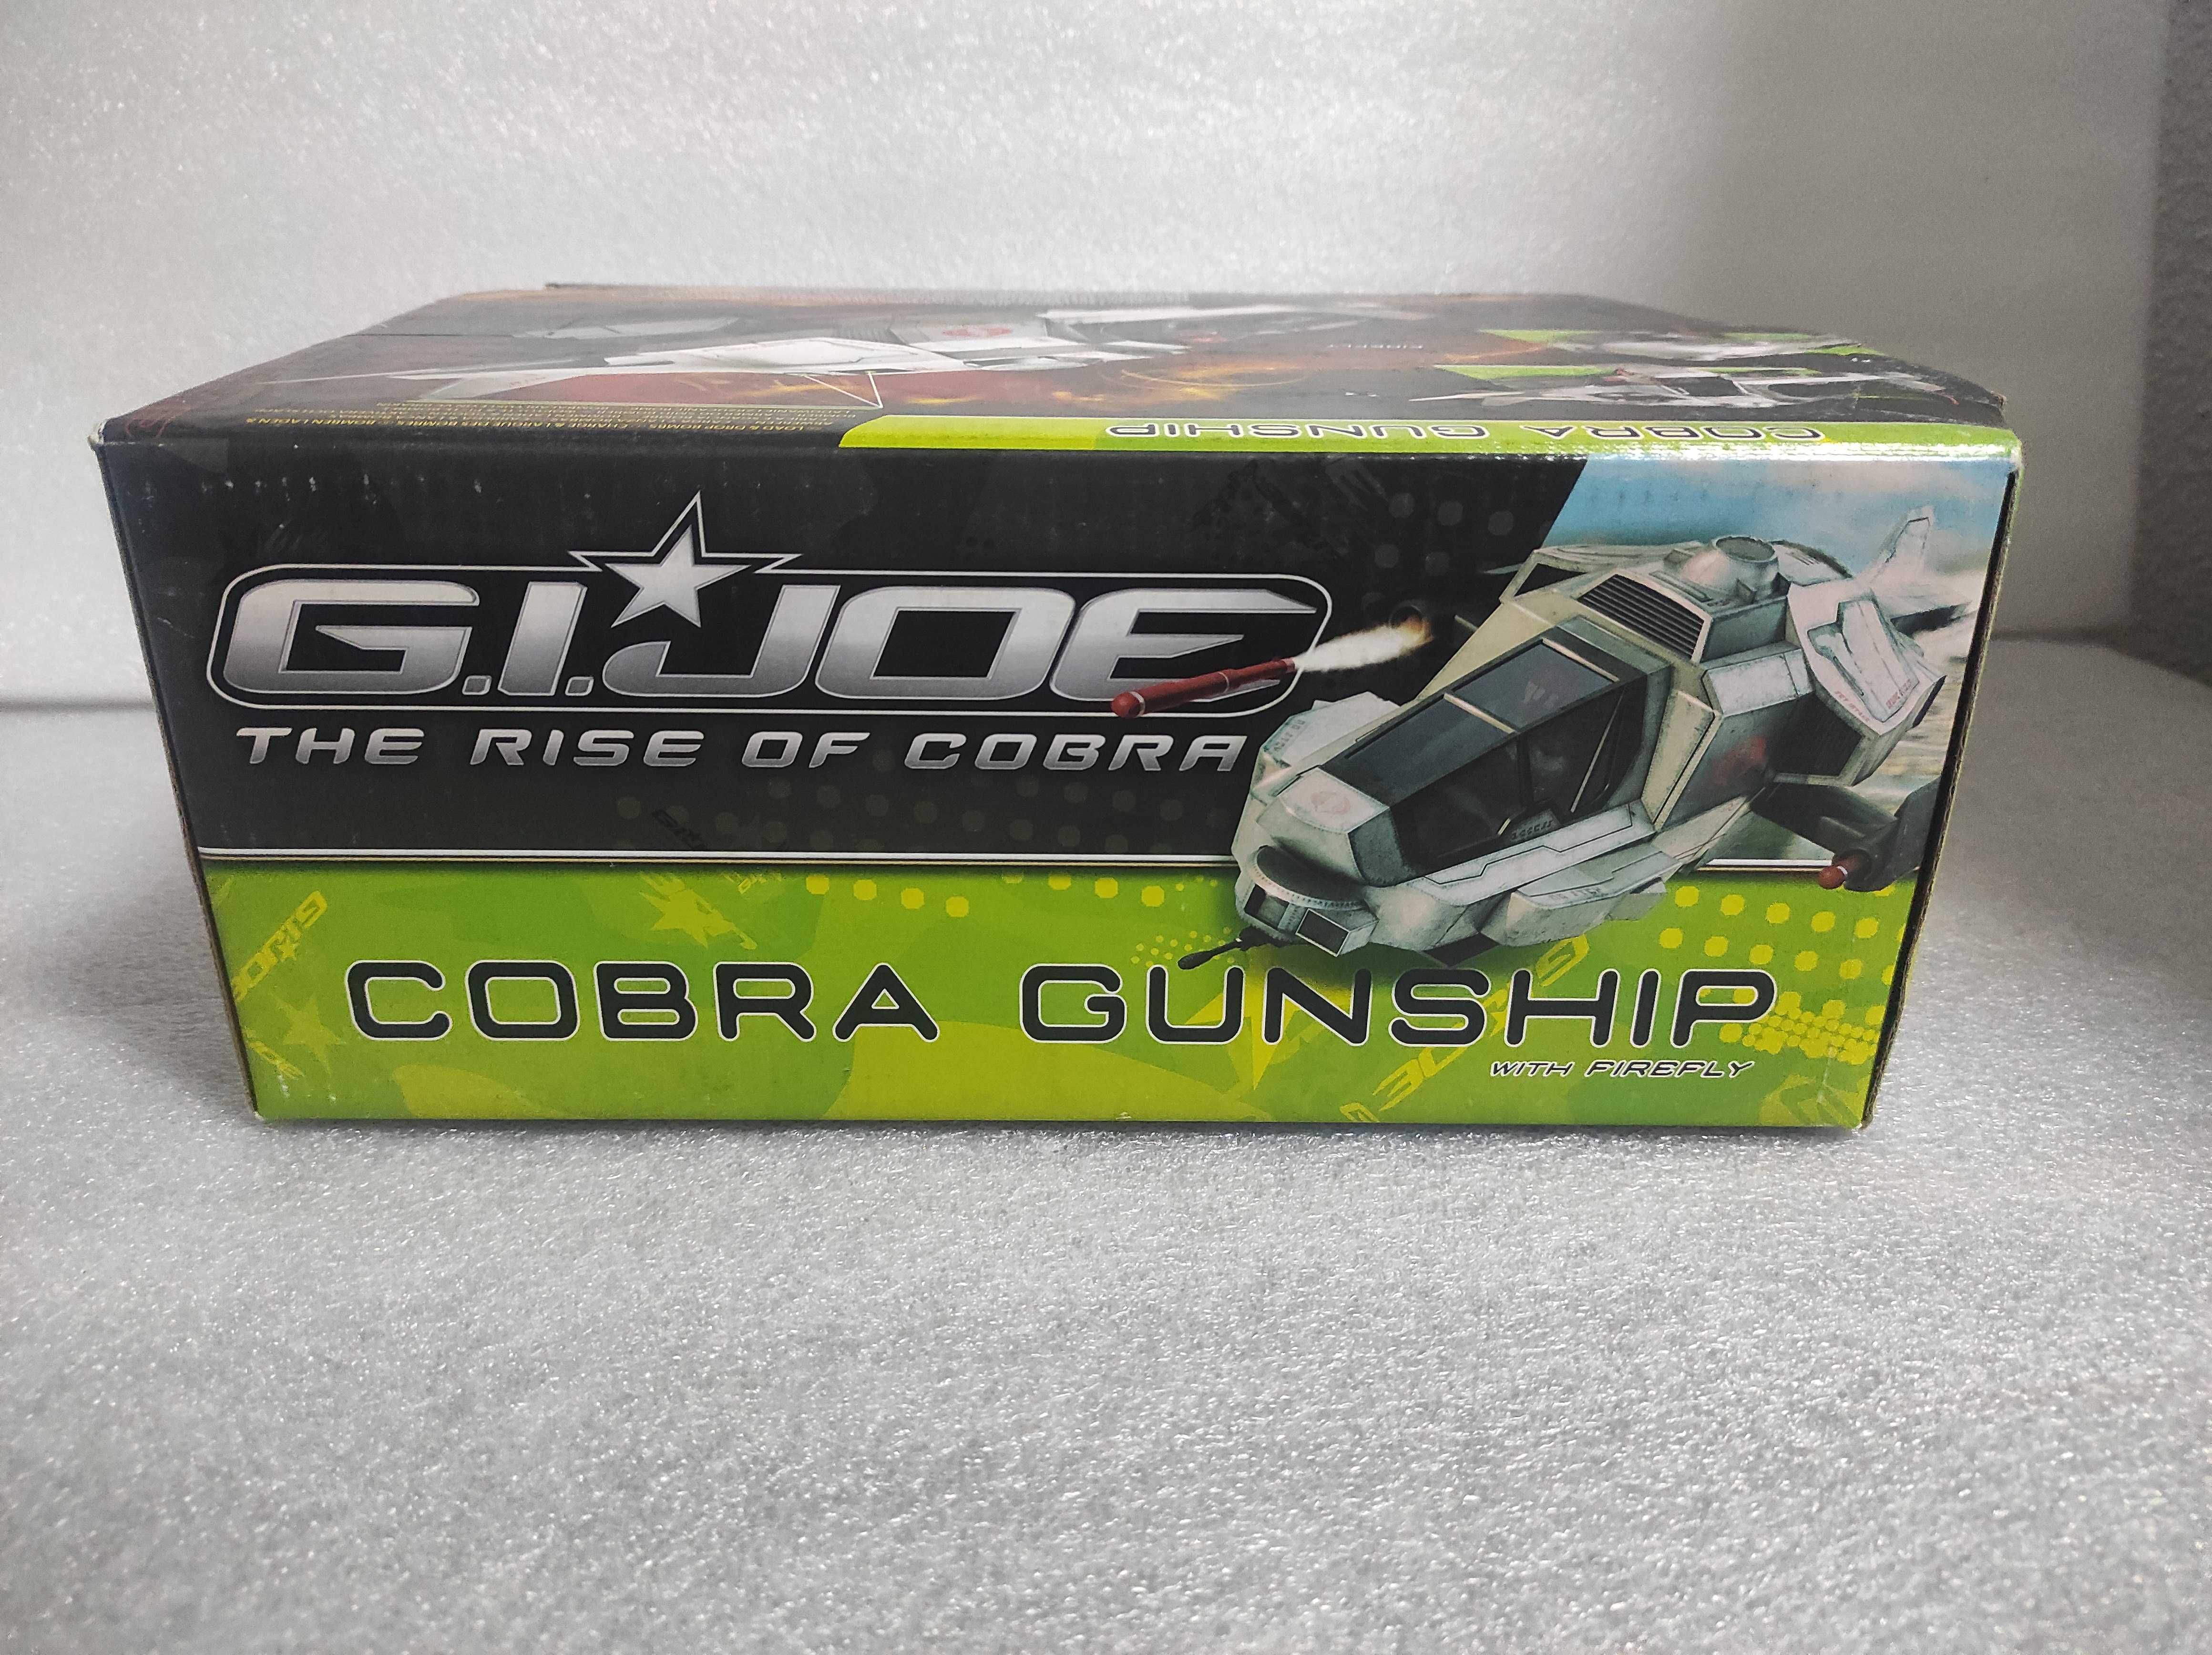 GI JOE Rise of Cobra Gunship Com Figura Firefly 2009 Hasbro Novo